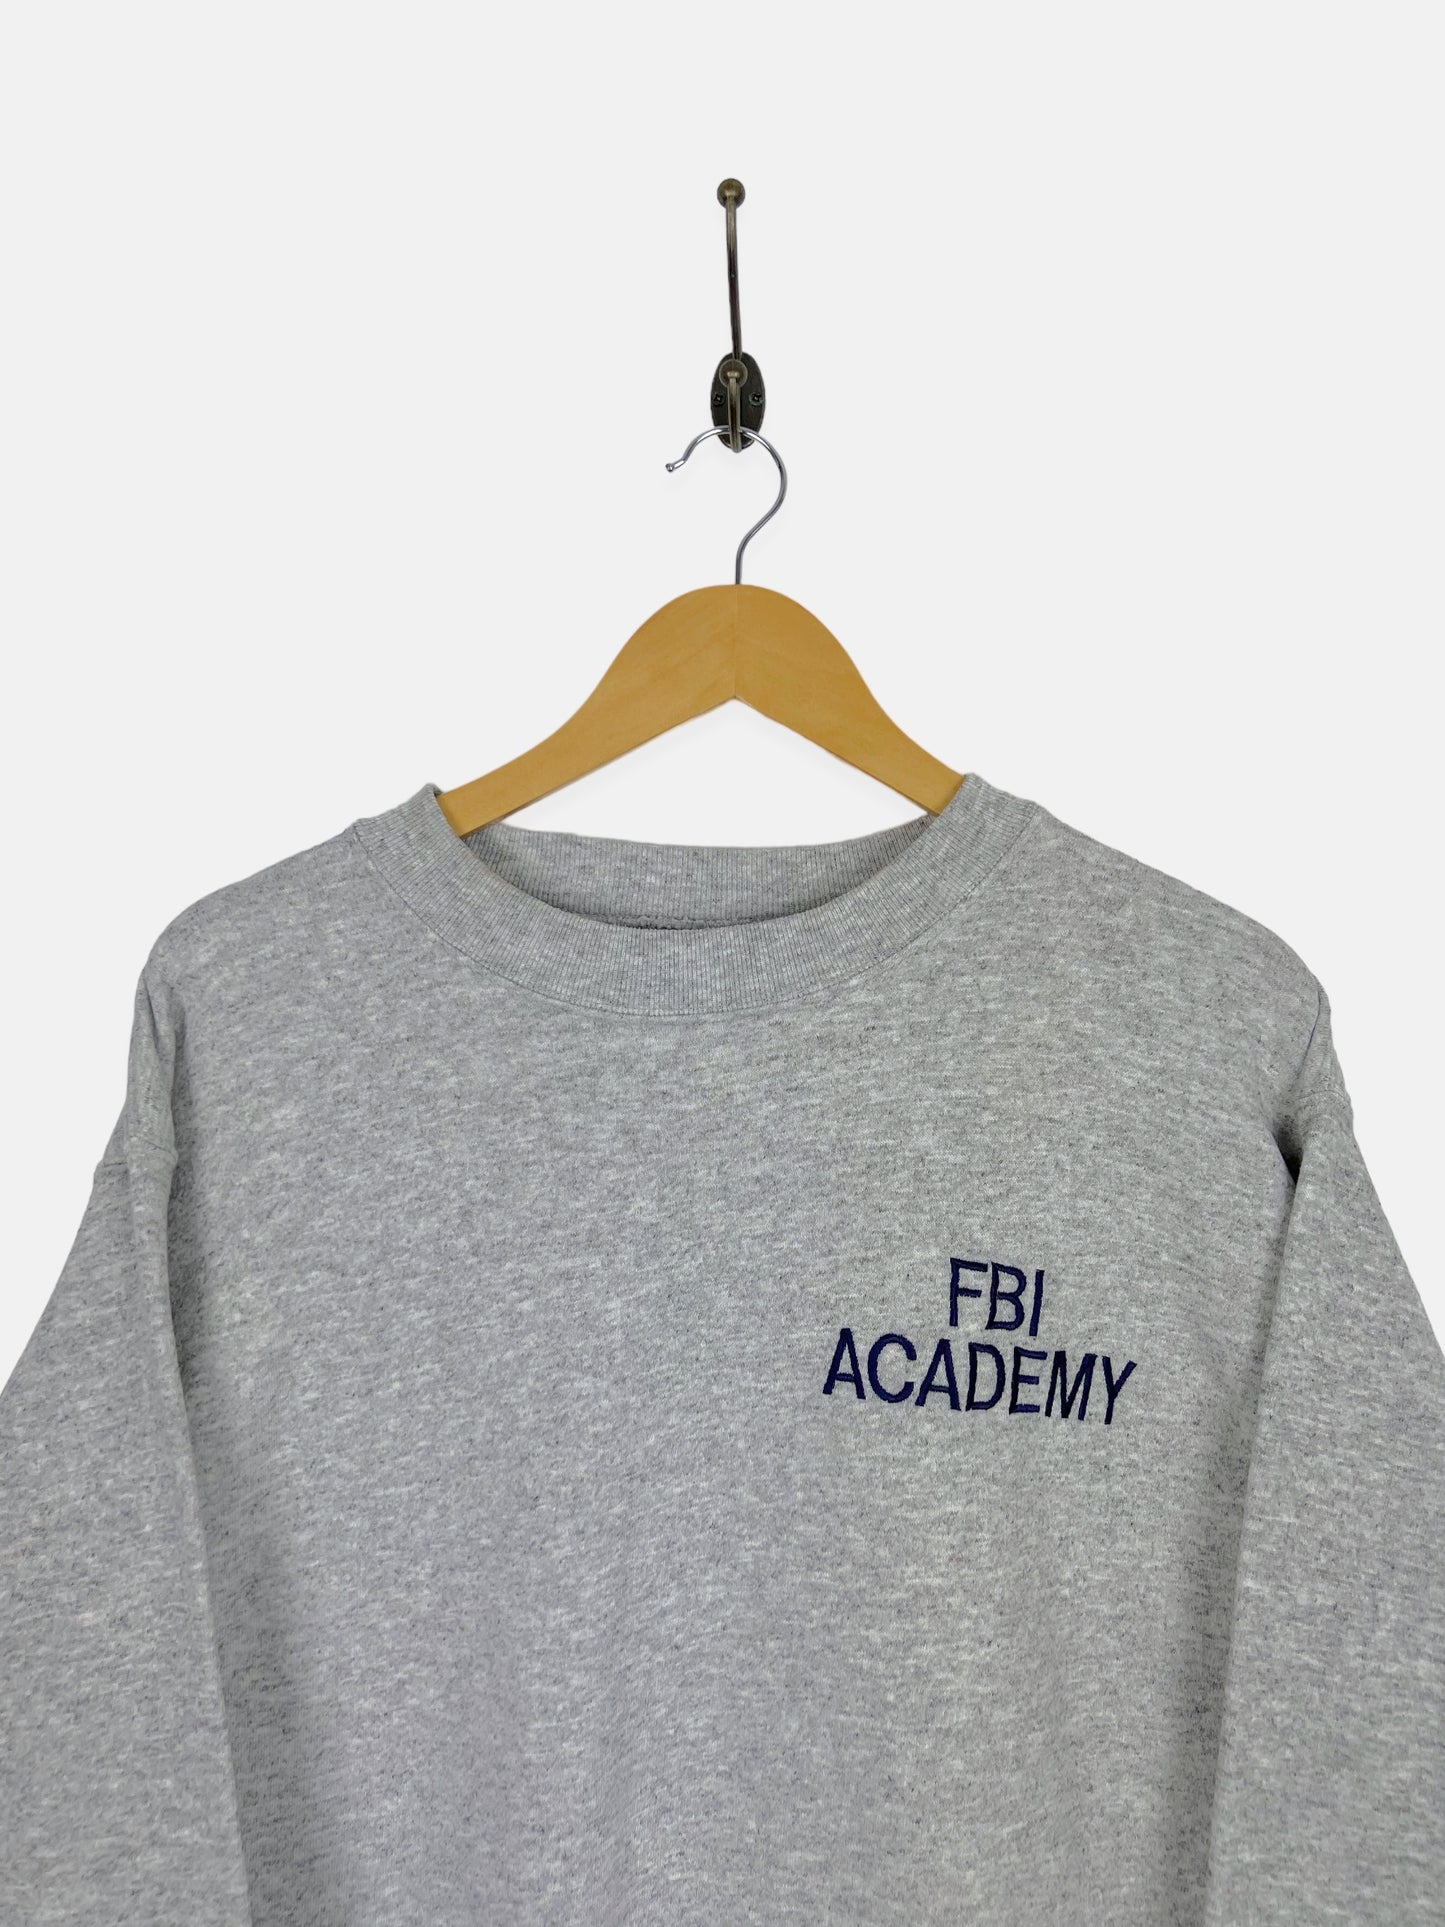 90's FBI Academy USA Made Embroidered Vintage Sweatshirt Size M-L